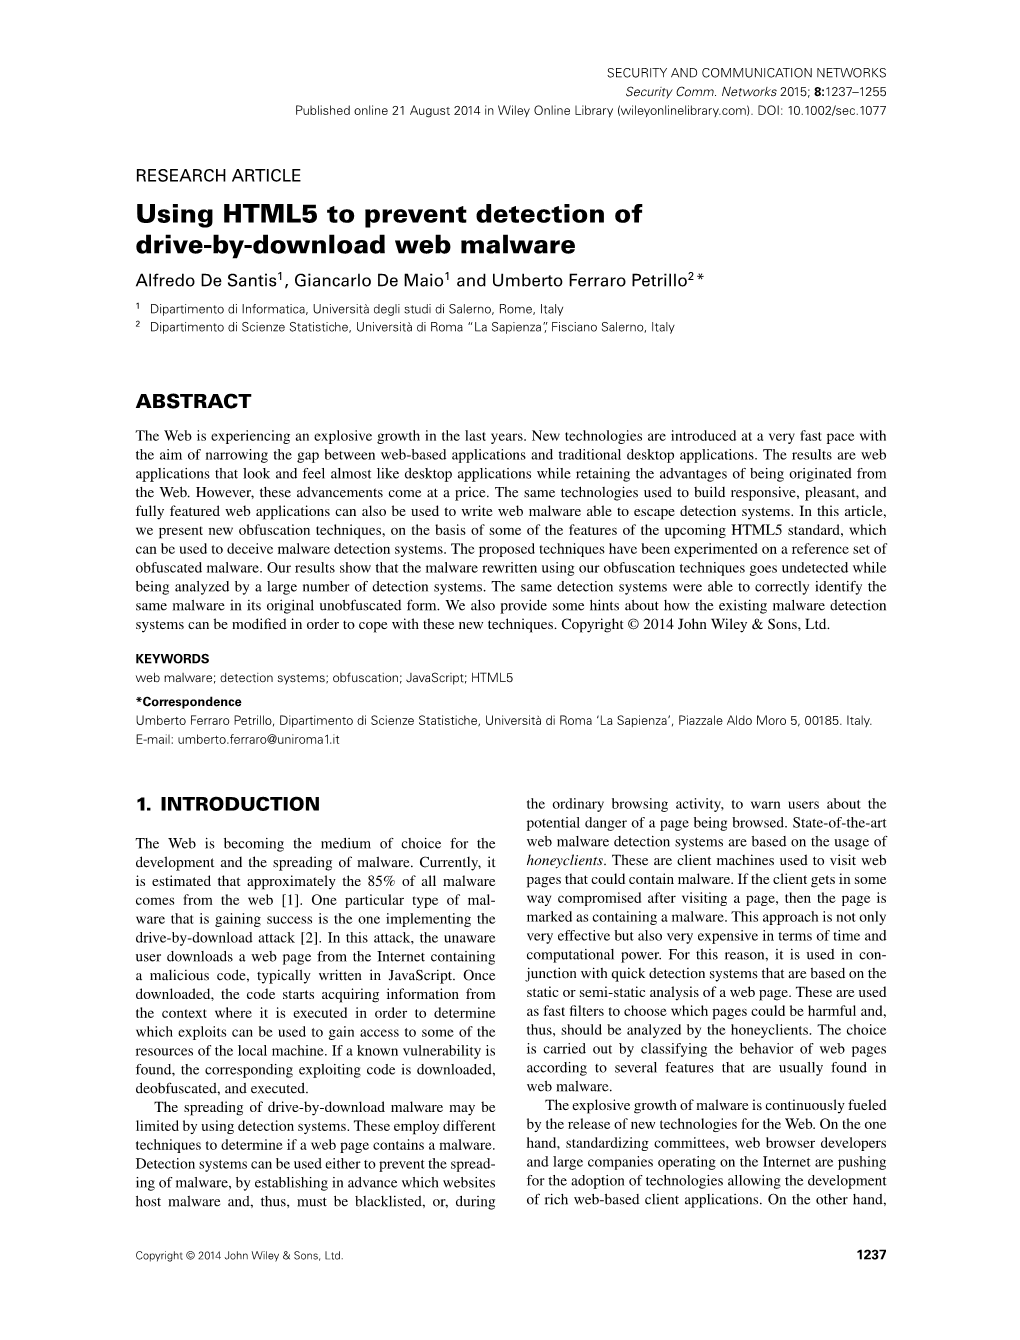 Using HTML5 to Prevent Detection of Drive-By-Download Web Malware Alfredo De Santis1, Giancarlo De Maio1 and Umberto Ferraro Petrillo2 *